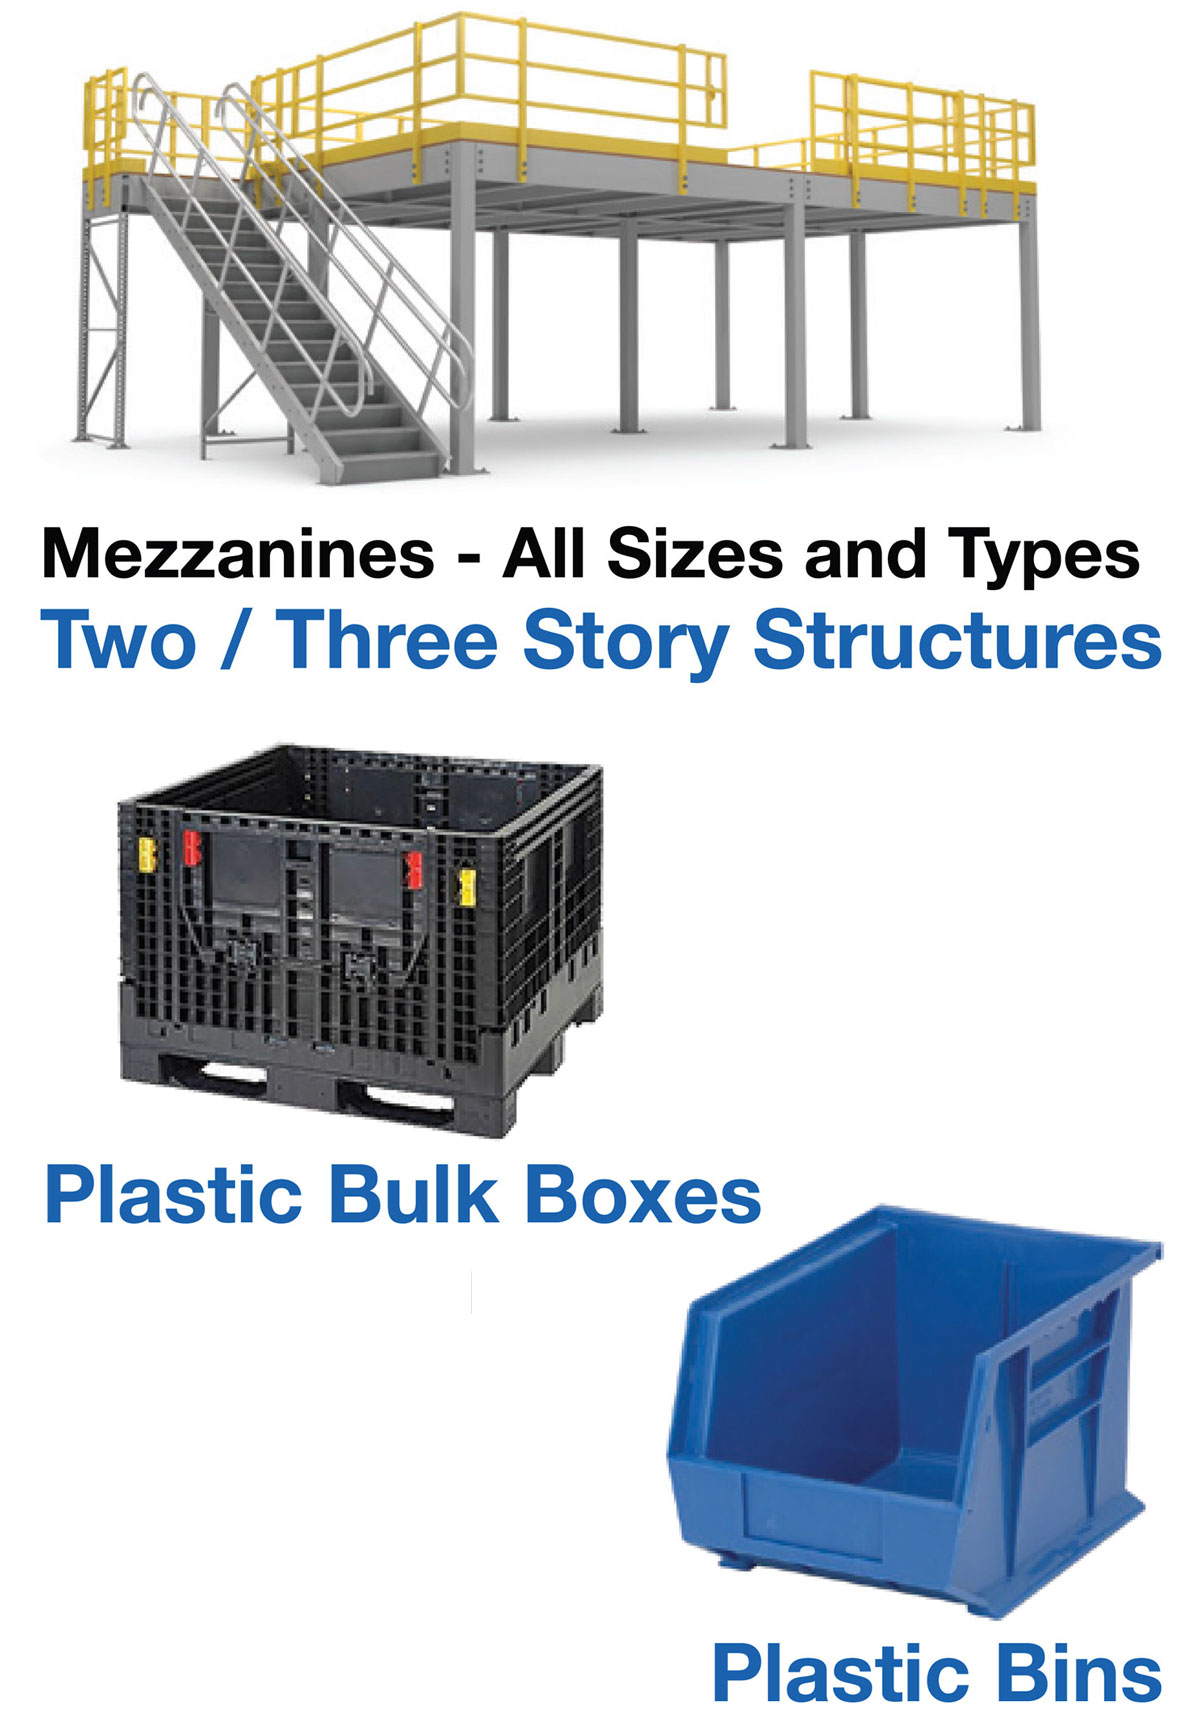 Mezzanines, Plastic Bulk Boxes, and Plastic Bins